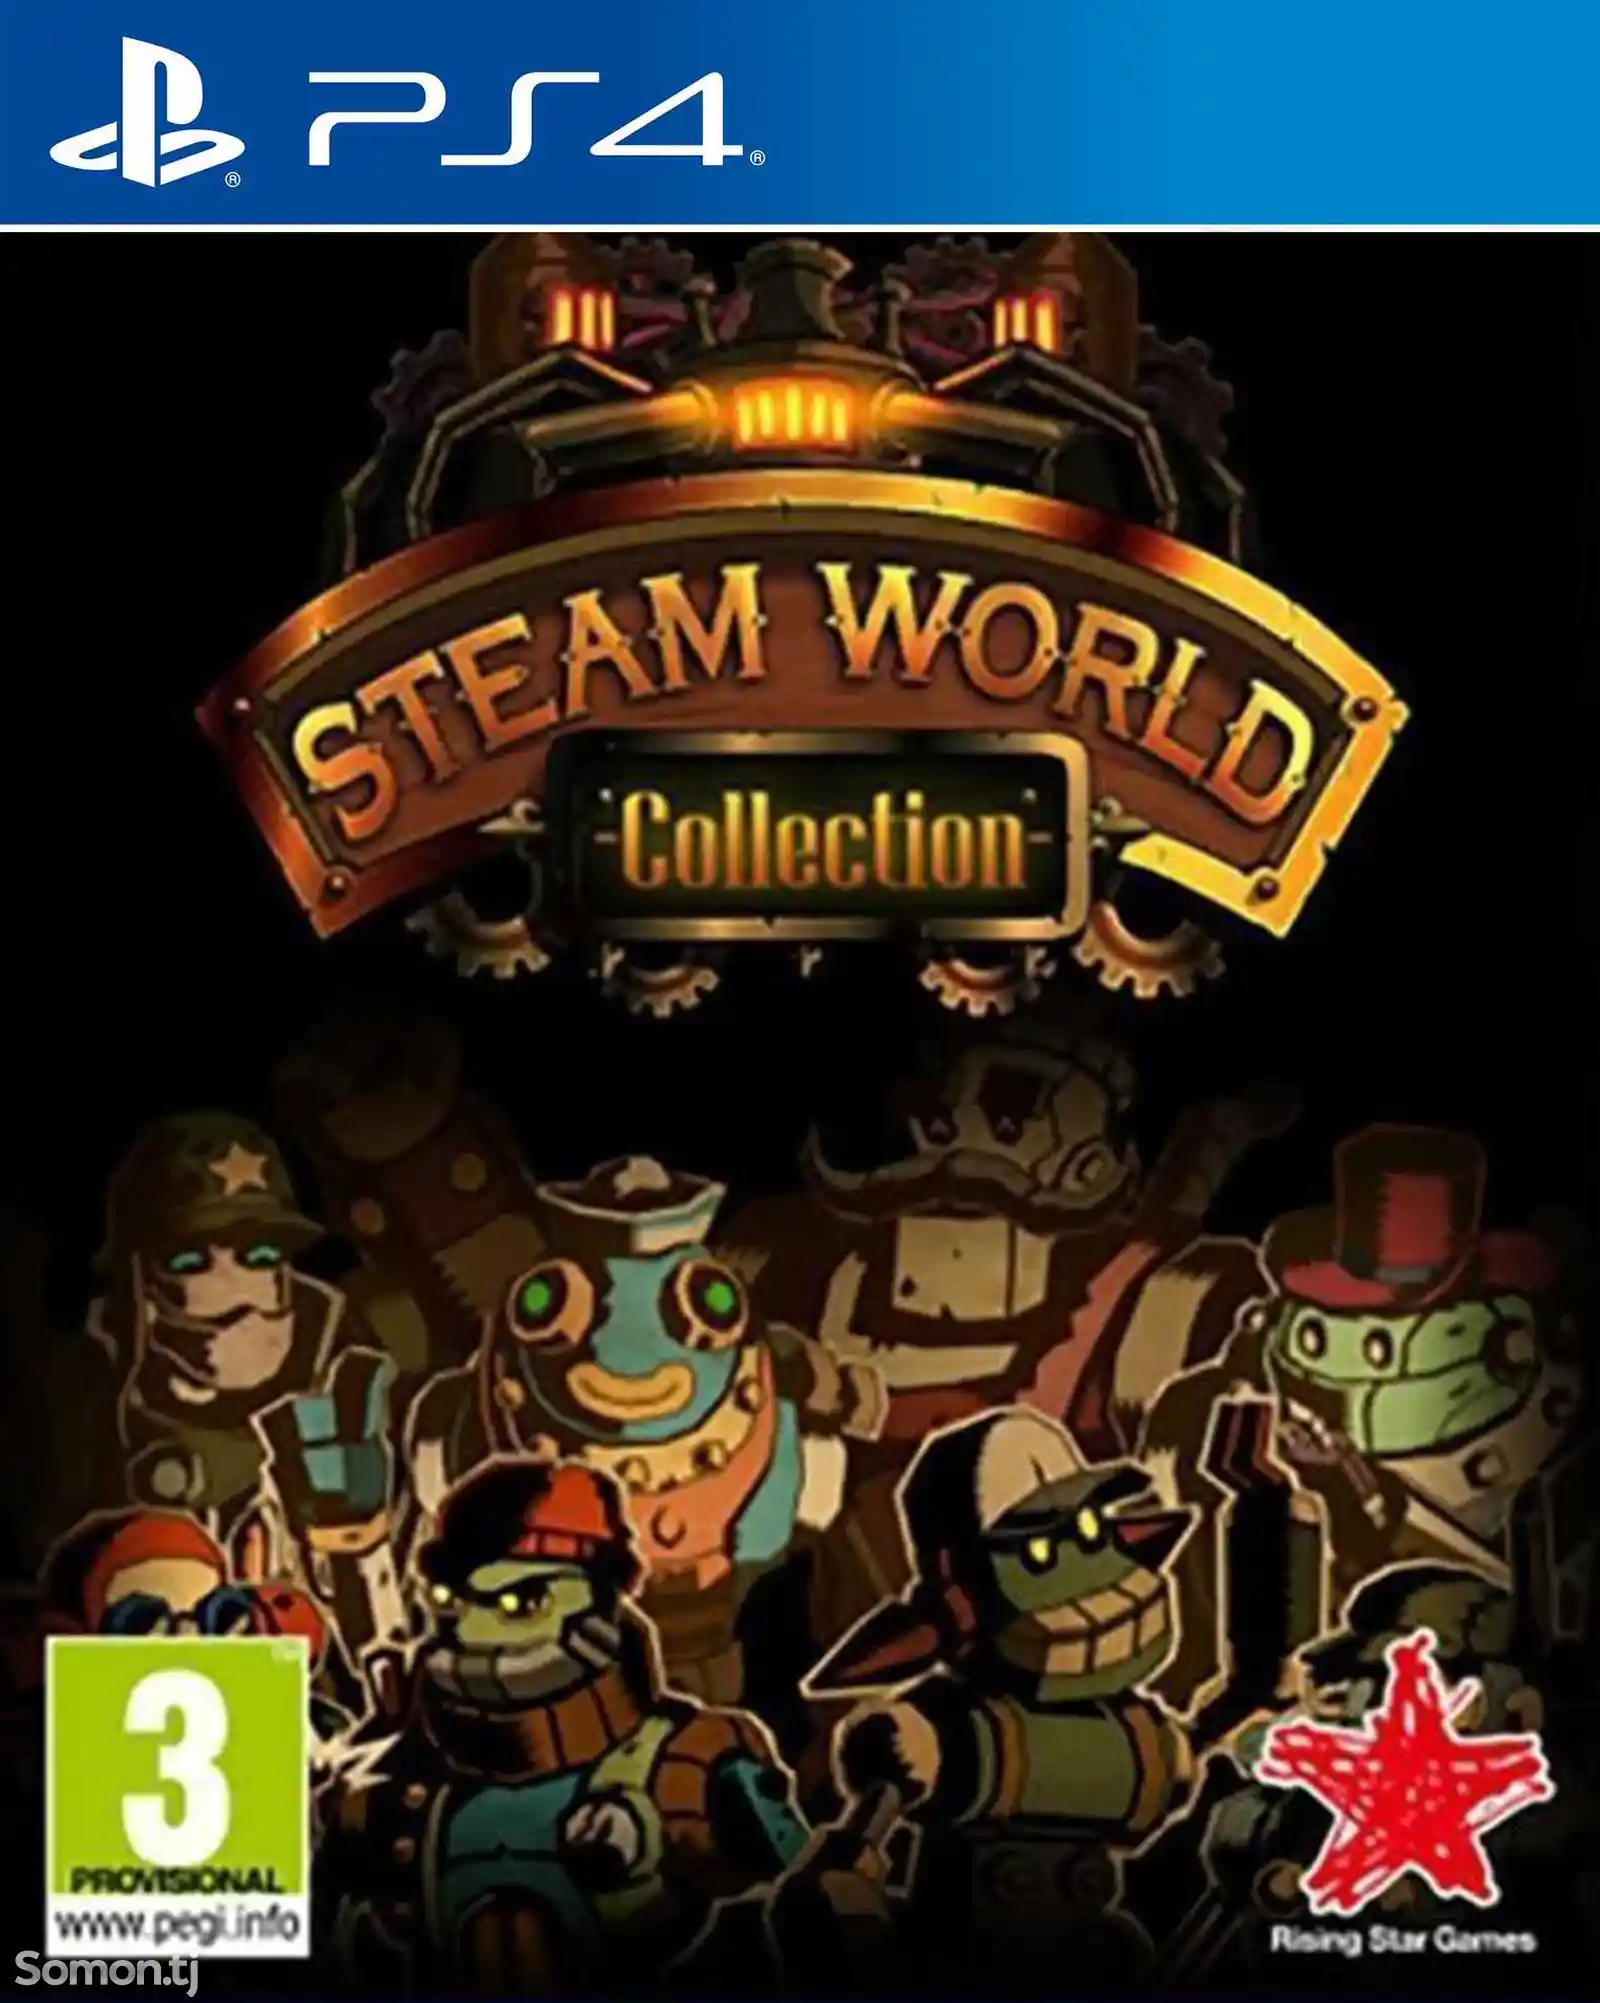 Игра Steam world collection для PS-4 / 5.05 / 6.72 / 7.02 / 7.55 / 9.00 /-1